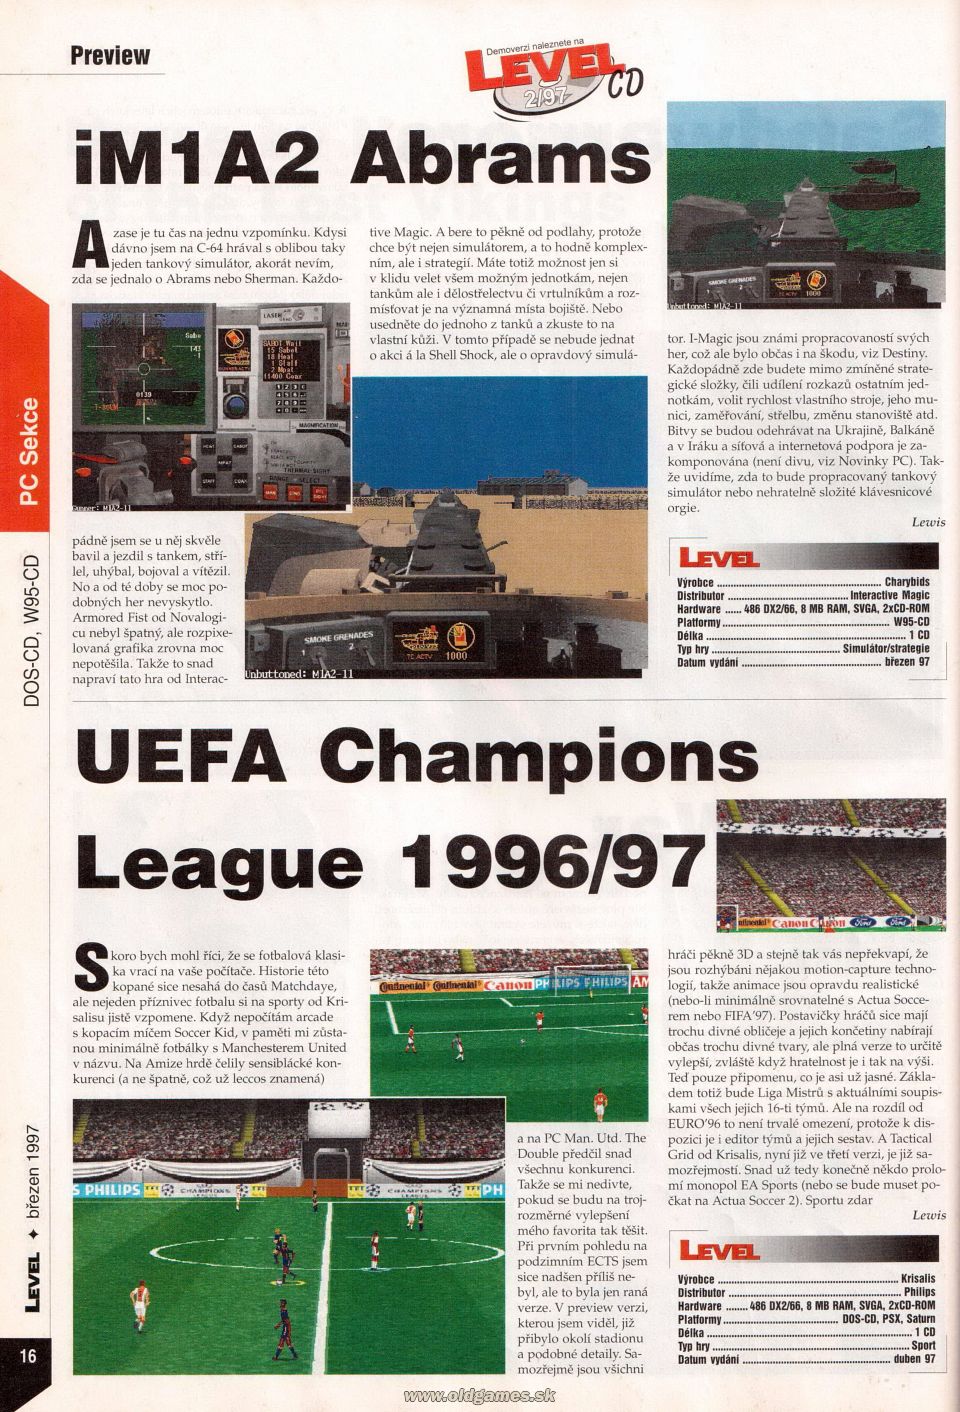 Preview: iMA2 Abrams, UEFA Champions League 1996/97